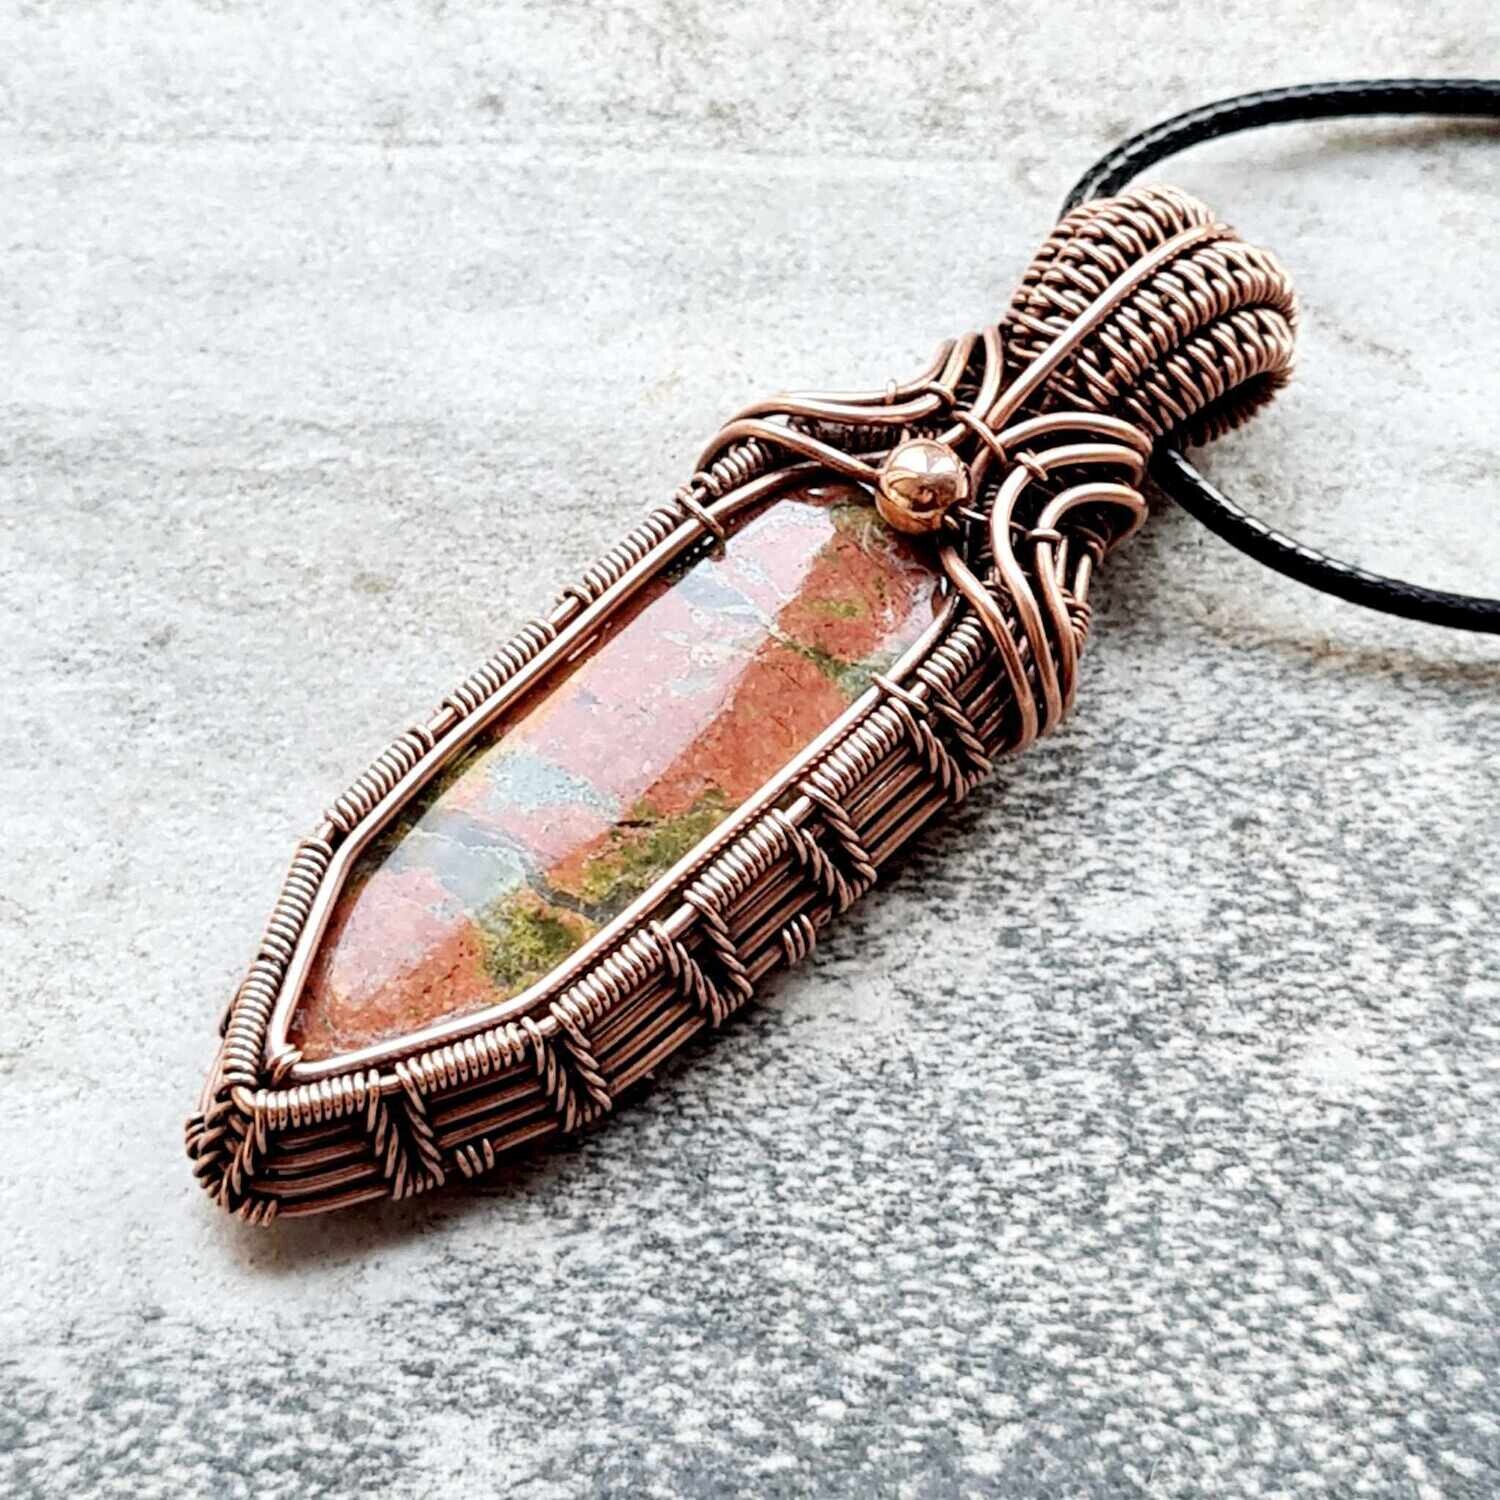 Unakite pendant with chain.